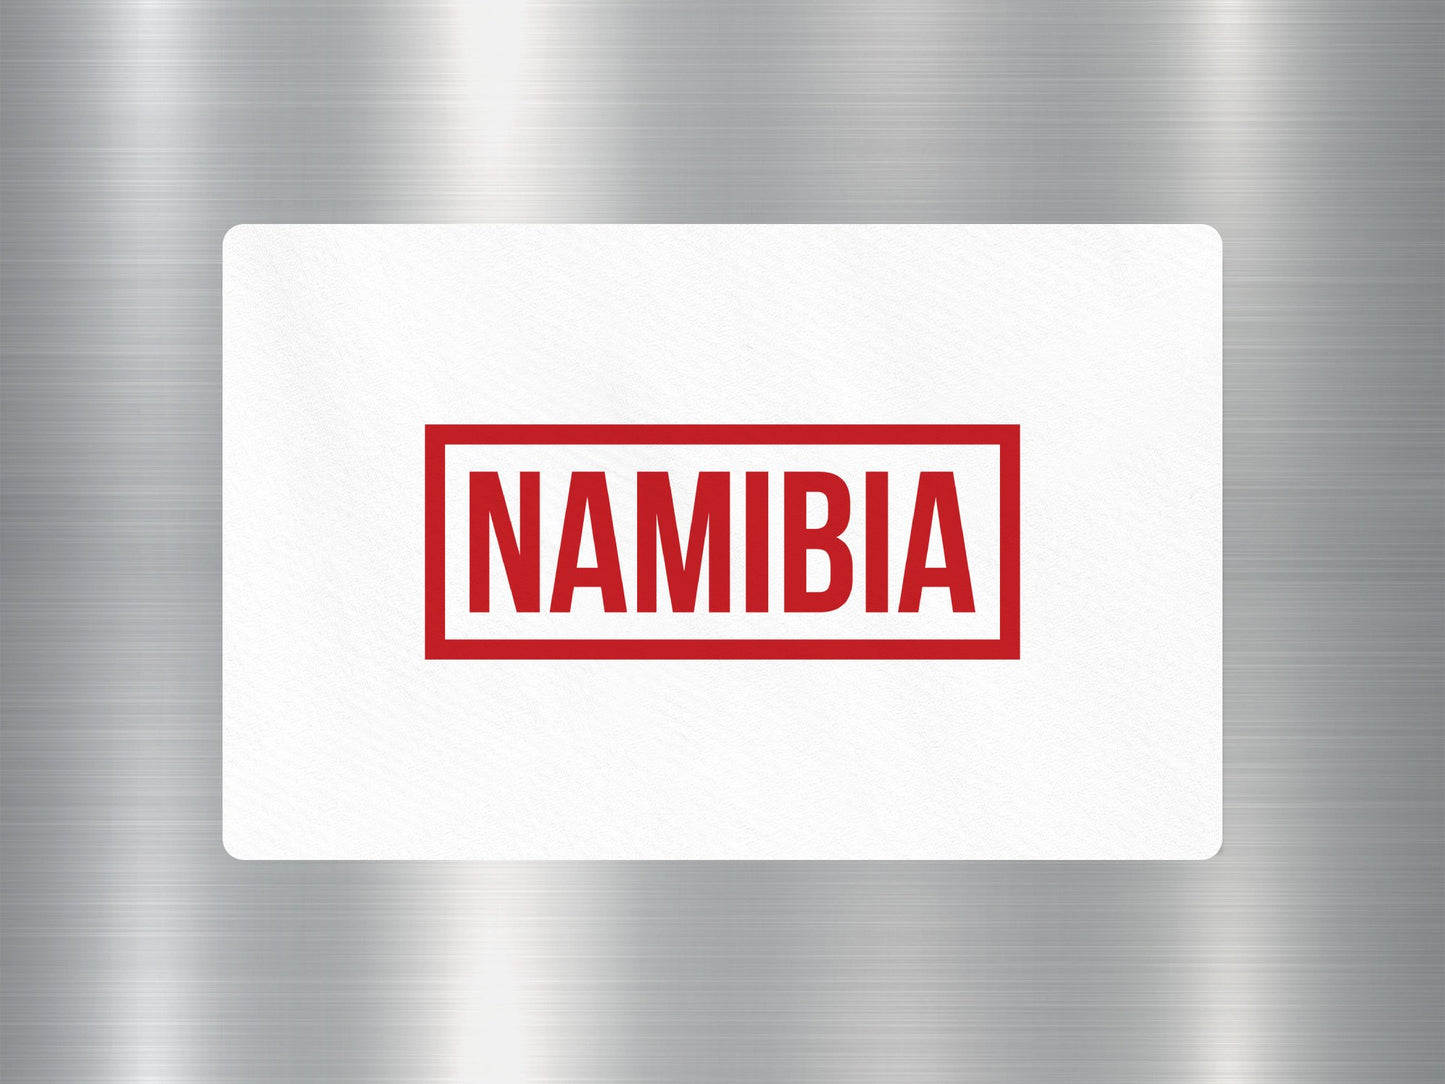 Namibia Travel Sticker